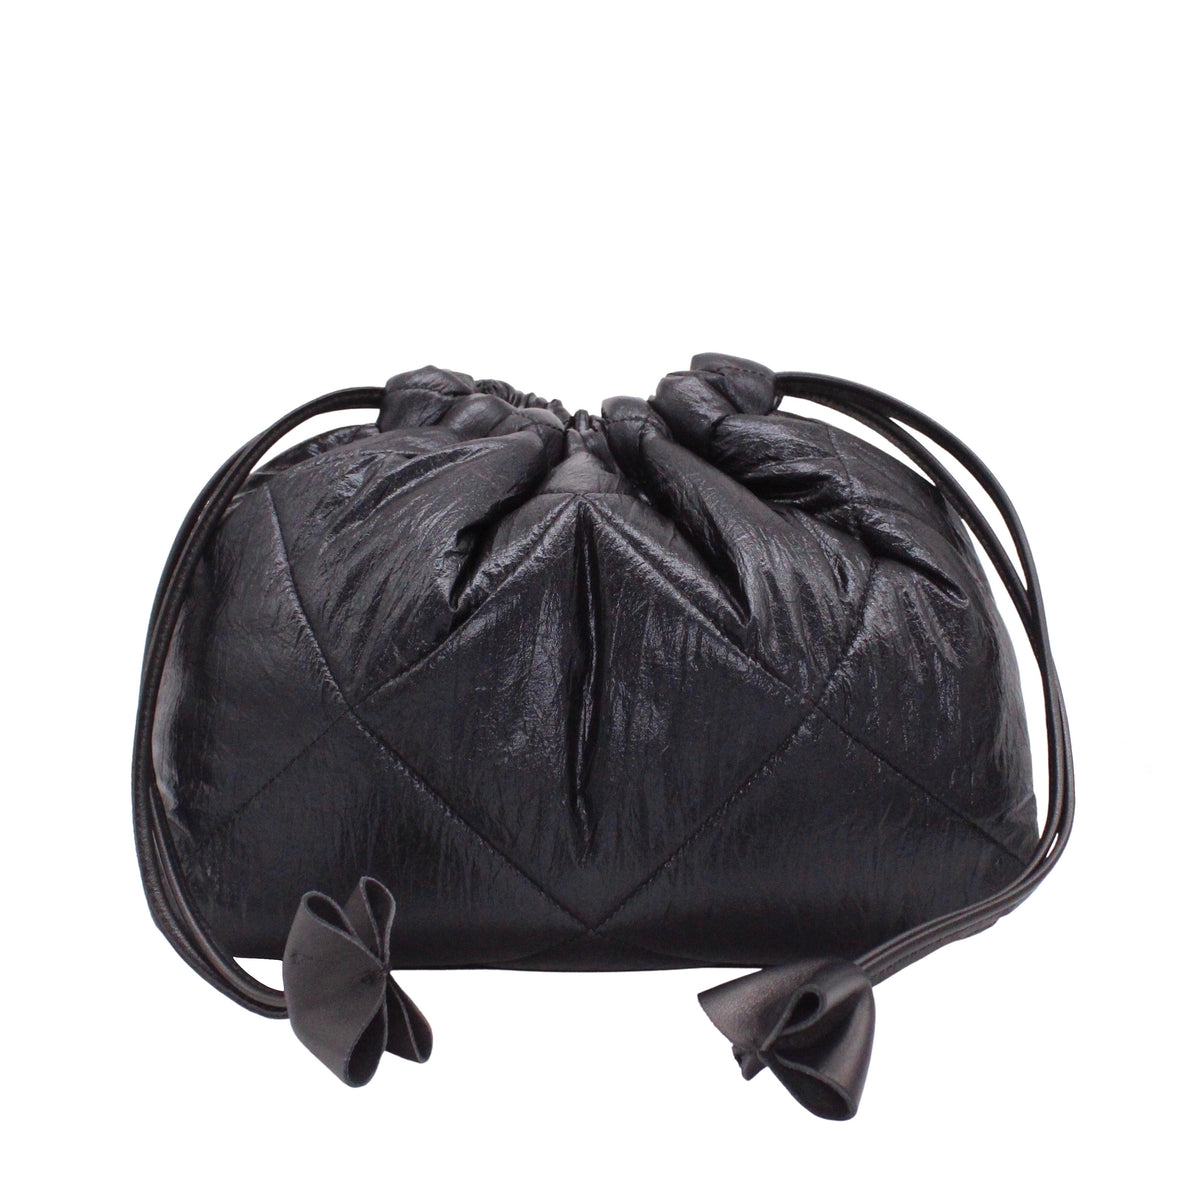 Maria La Rosa Alice Bag in Black